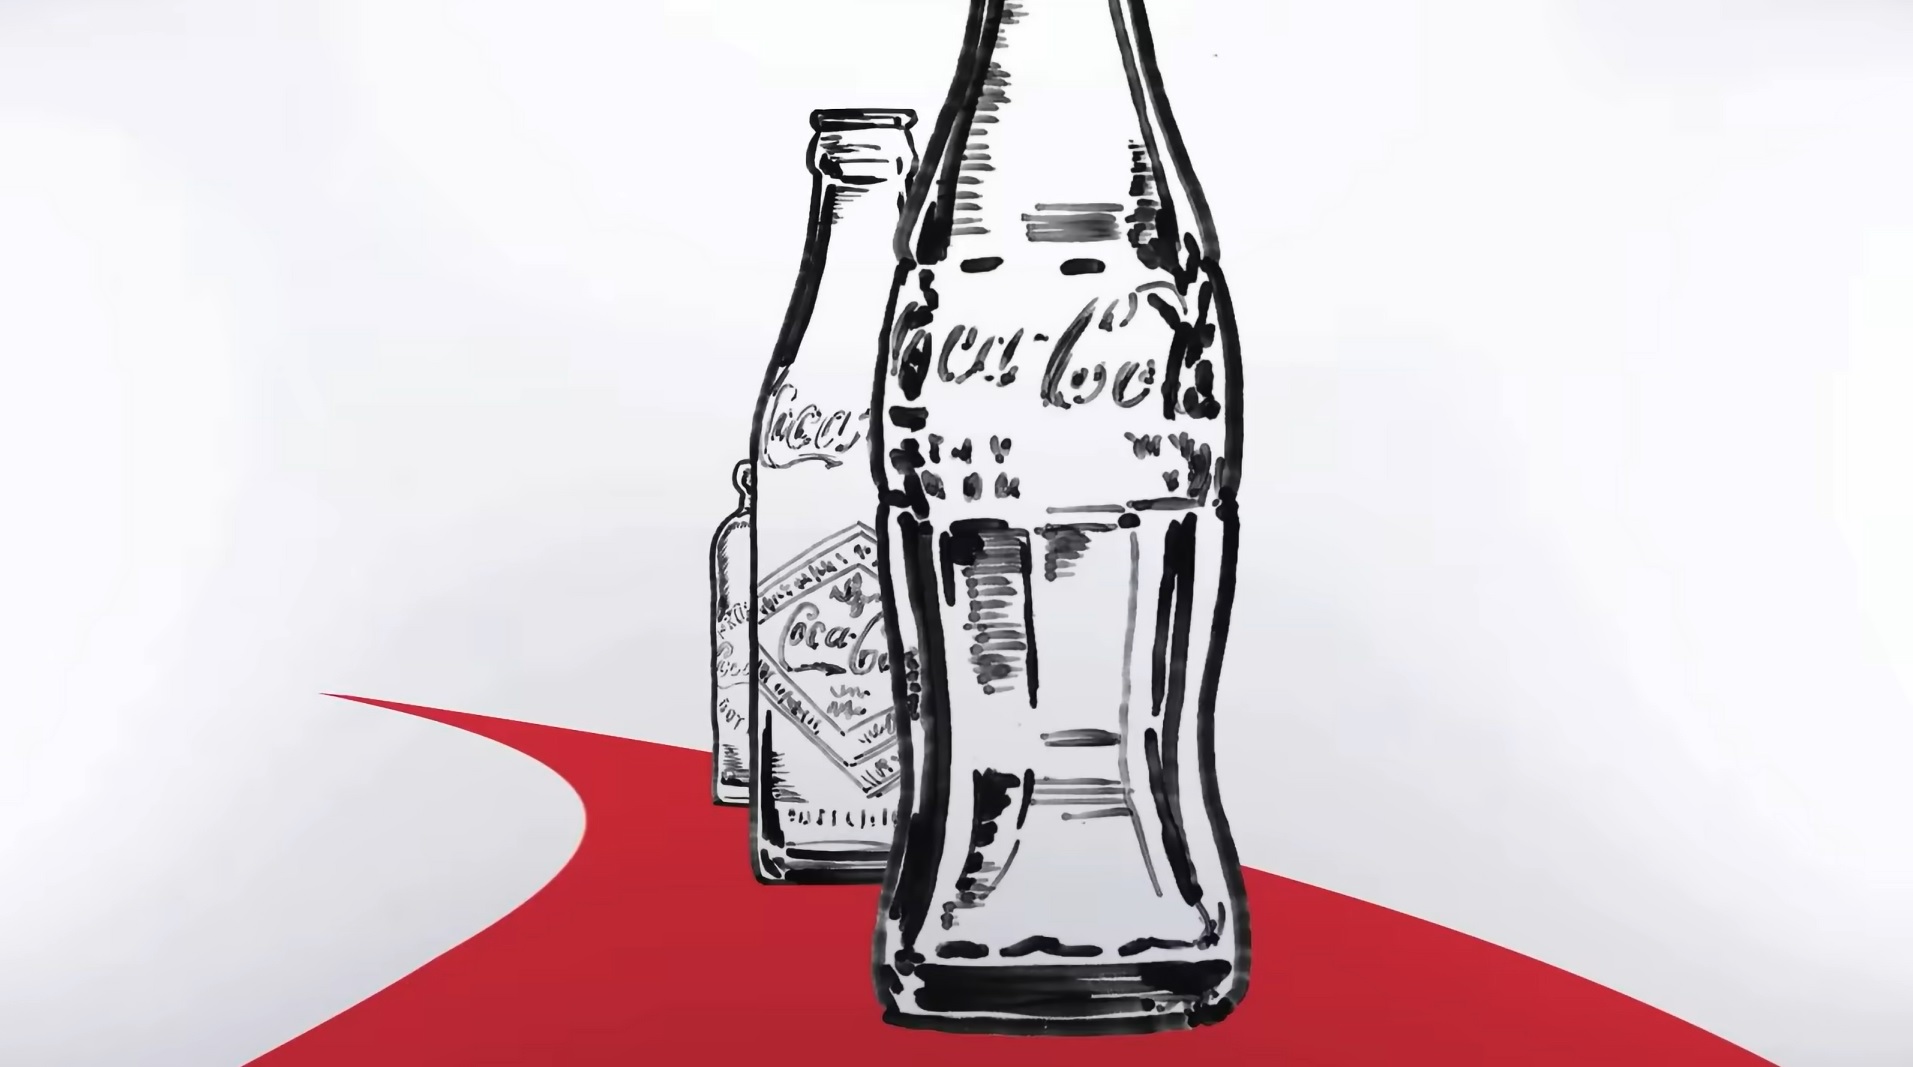 Coca-Cola bottle graphic